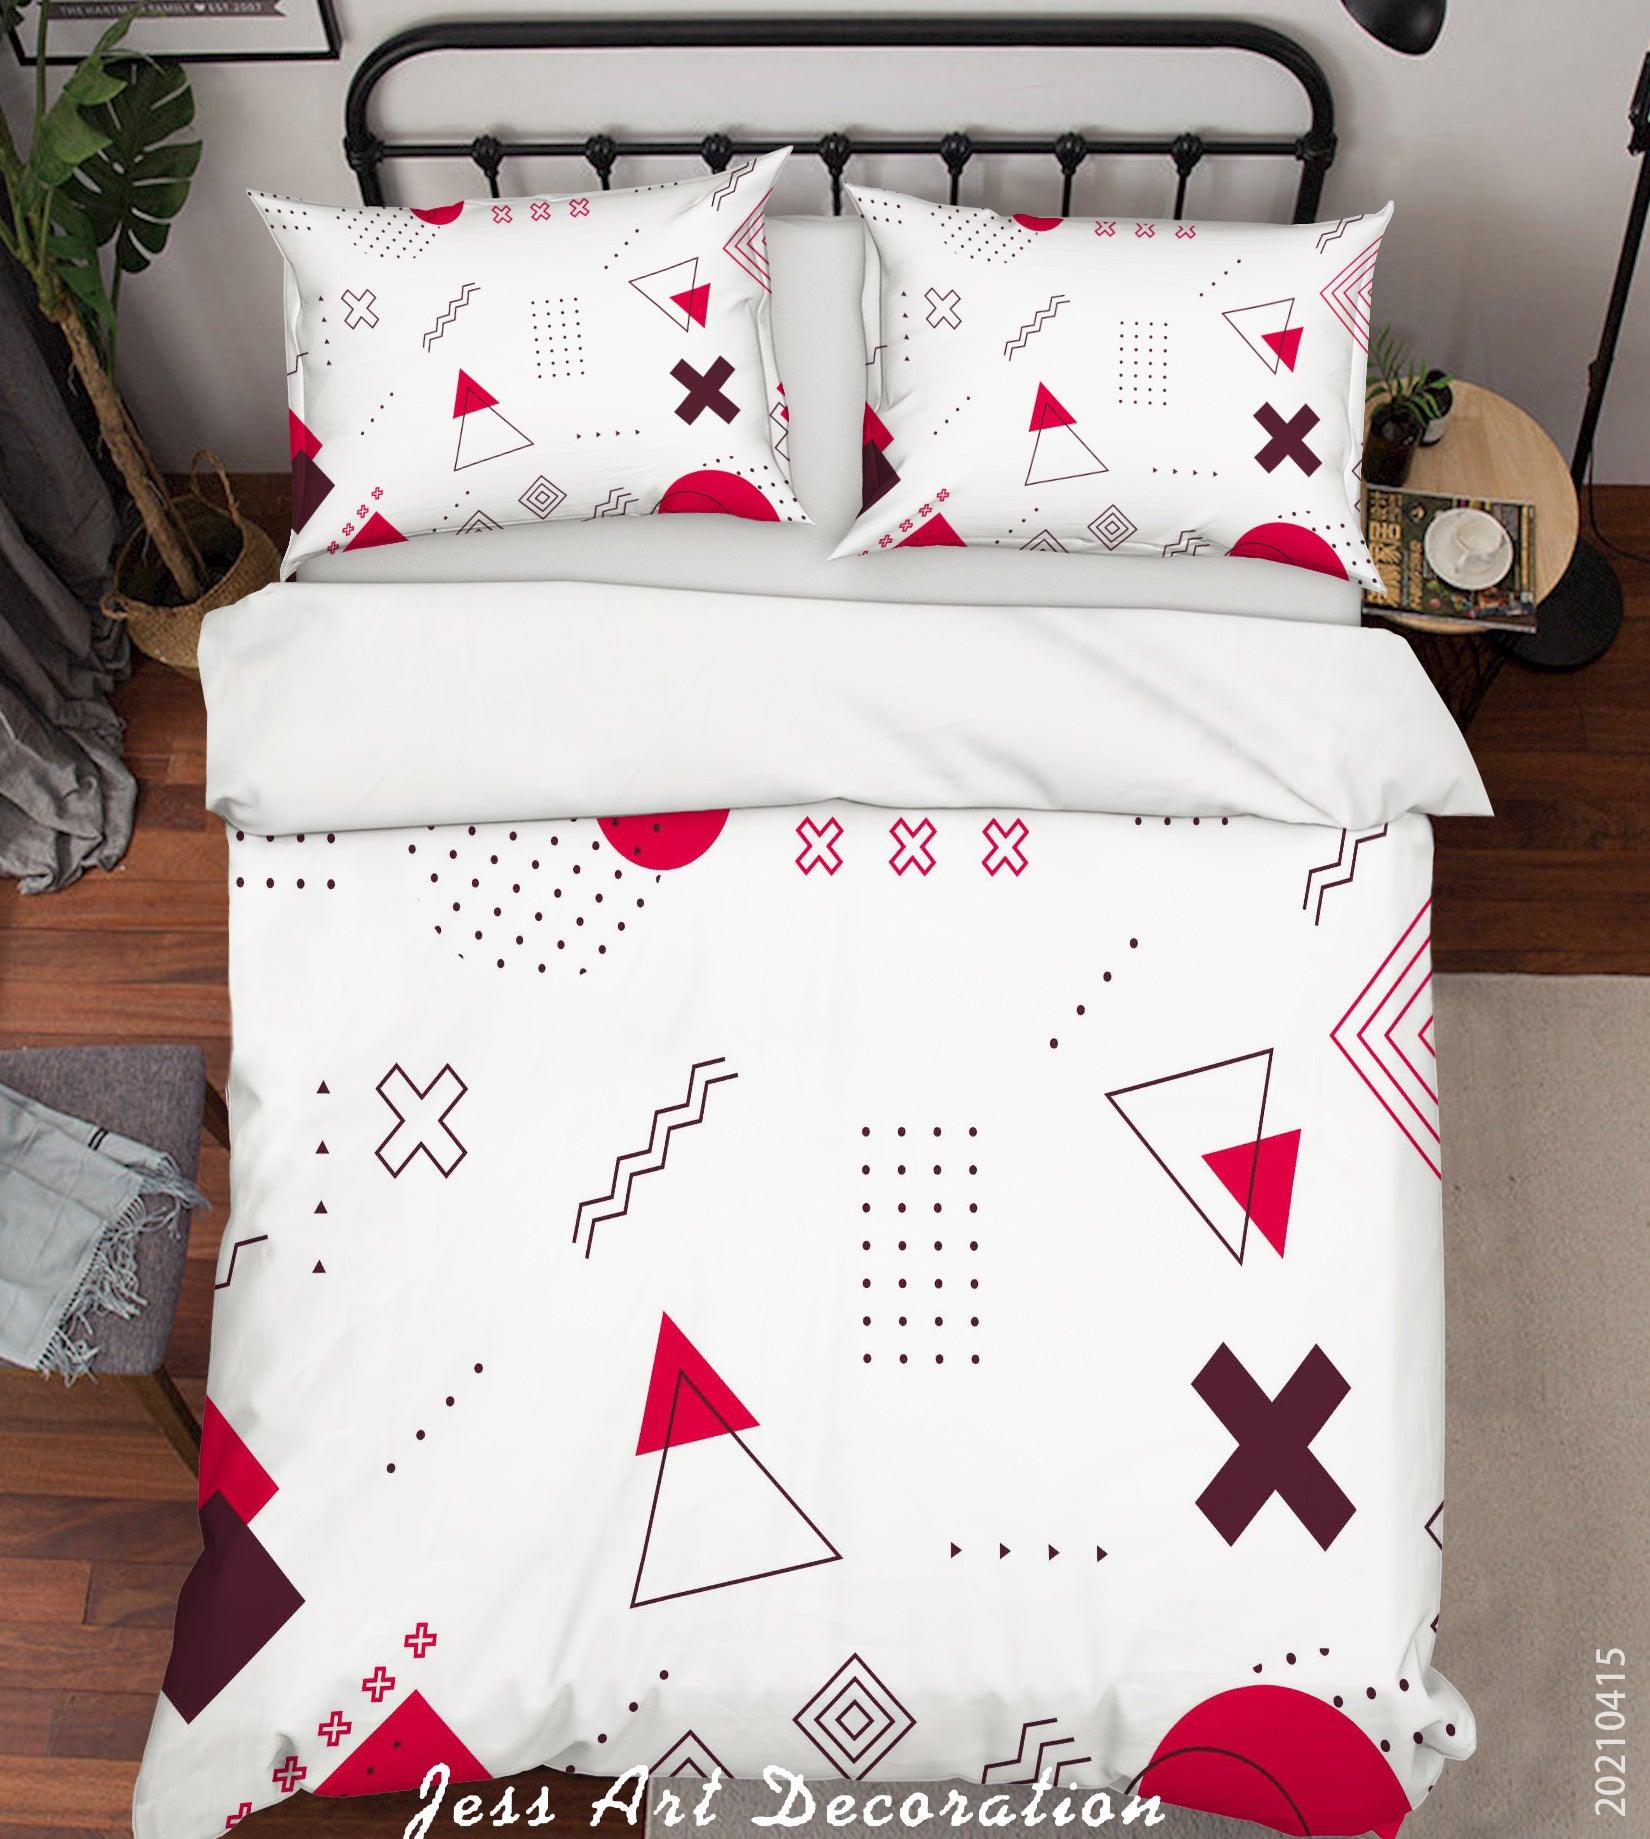 3D Abstract Color Geometry Quilt Cover Set Bedding Set Duvet Cover Pillowcases 104- Jess Art Decoration